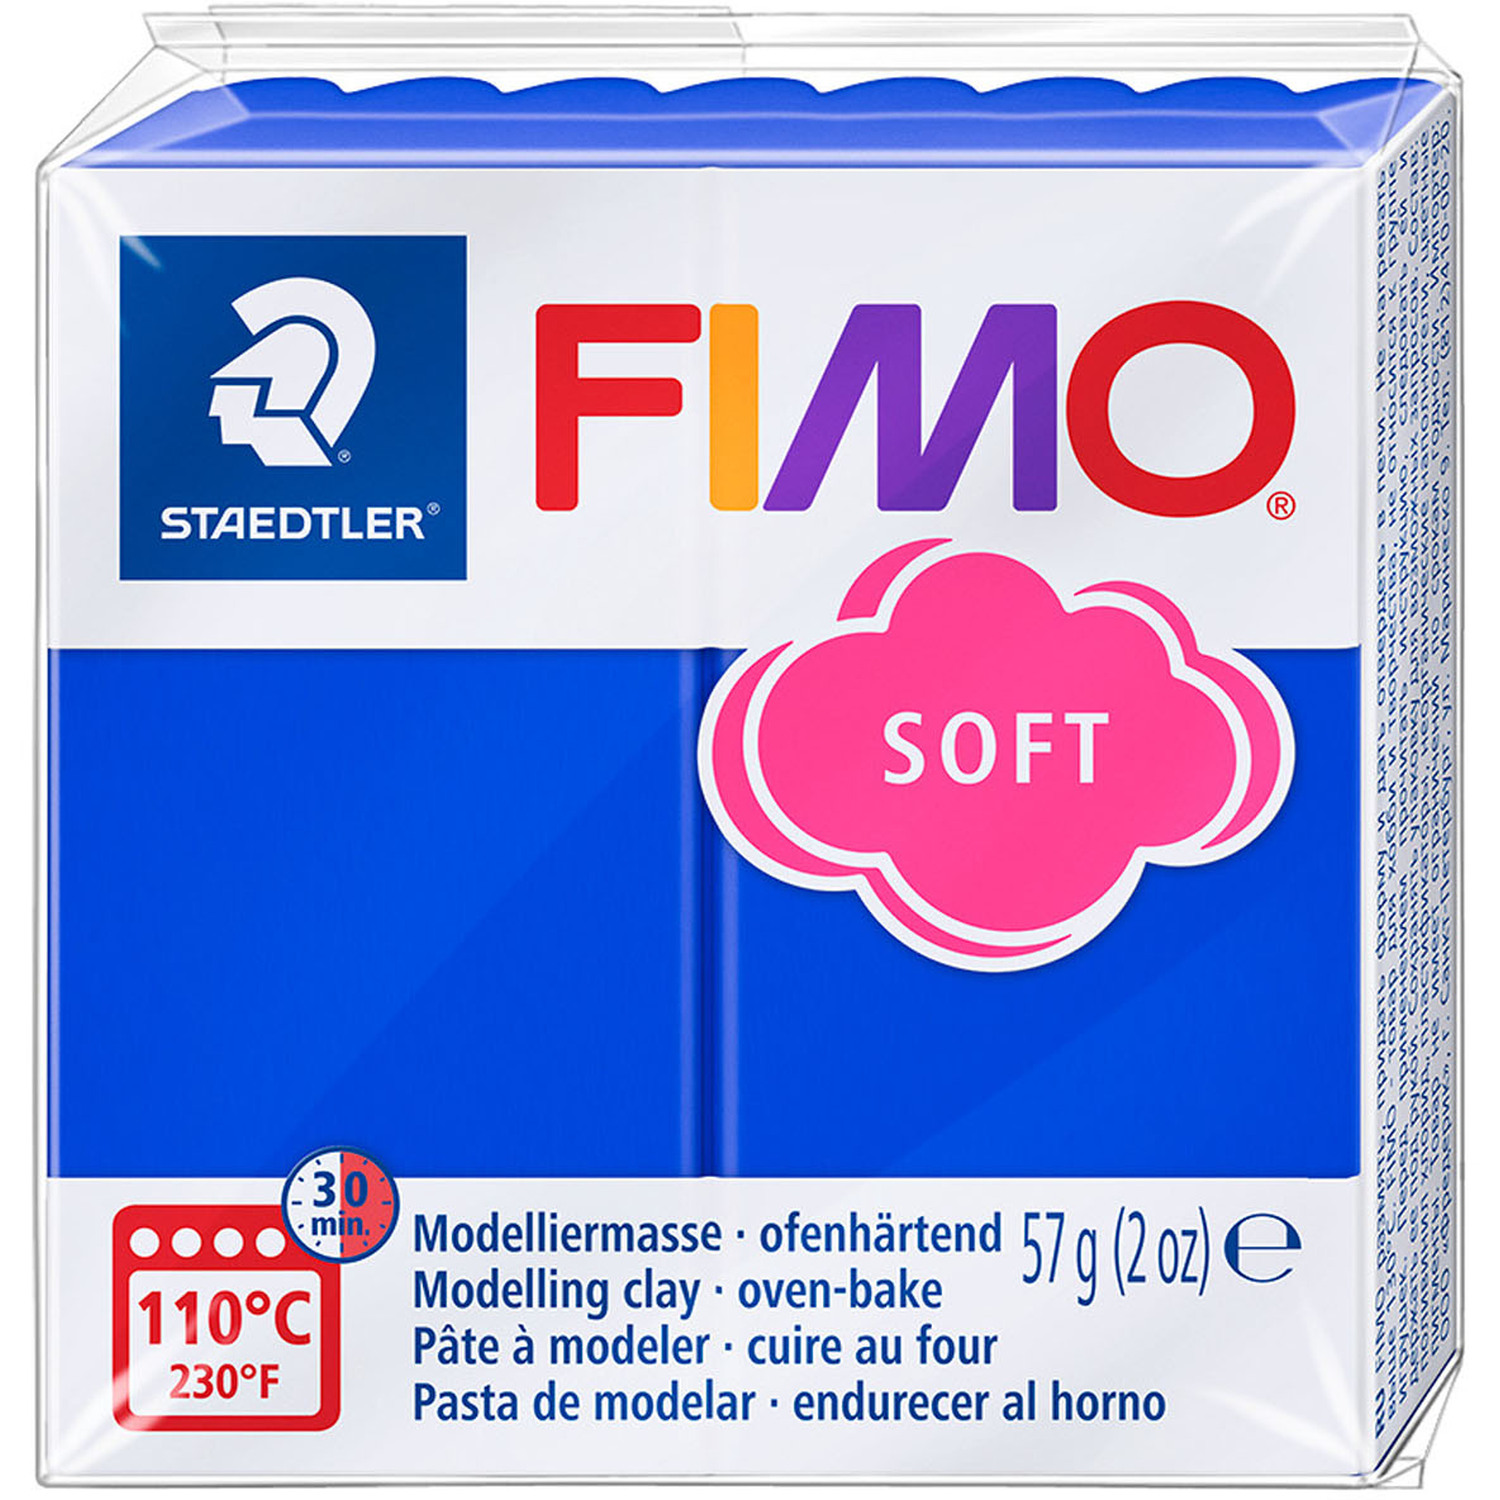 Staedtler FIMO Soft Modelling Clay Block - Brilliant Blue Image 1